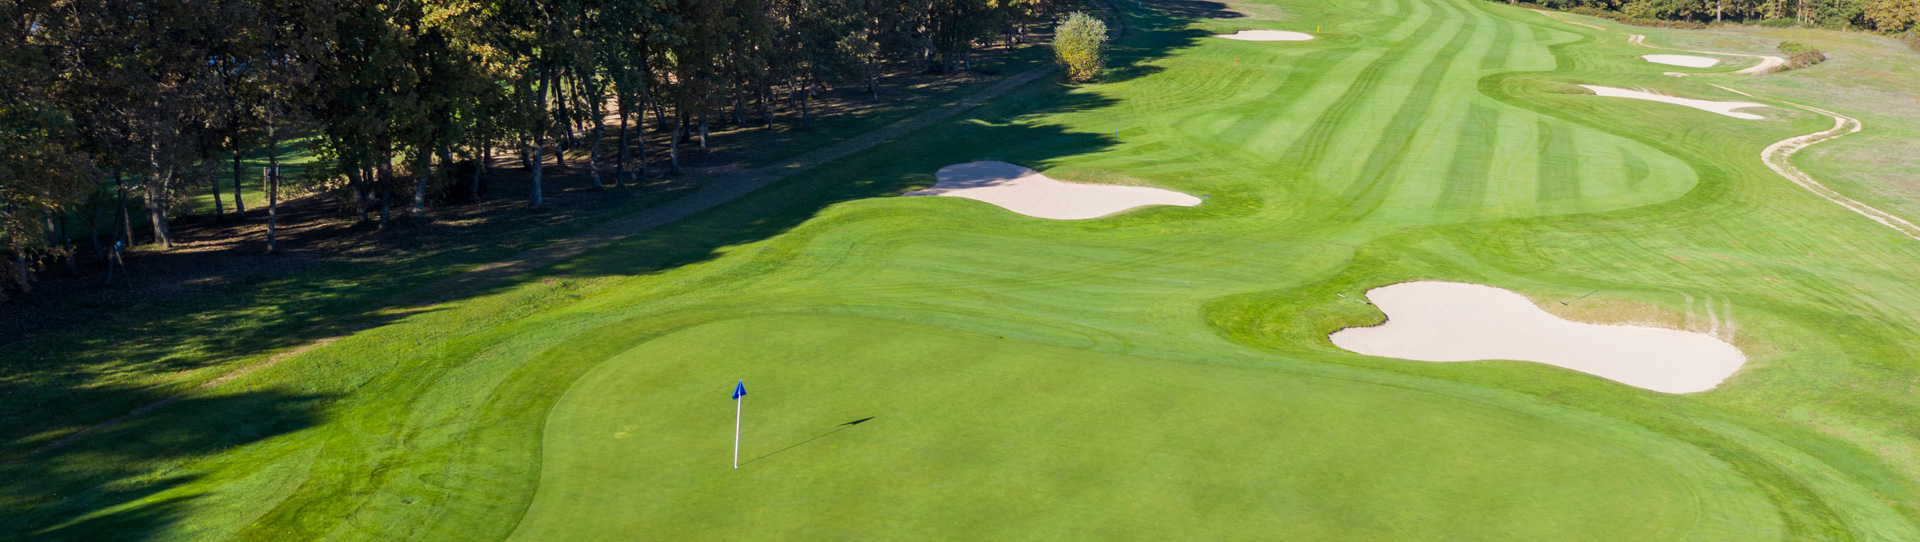 Spain golf courses - Izki Urturi Golf Course - Photo 1